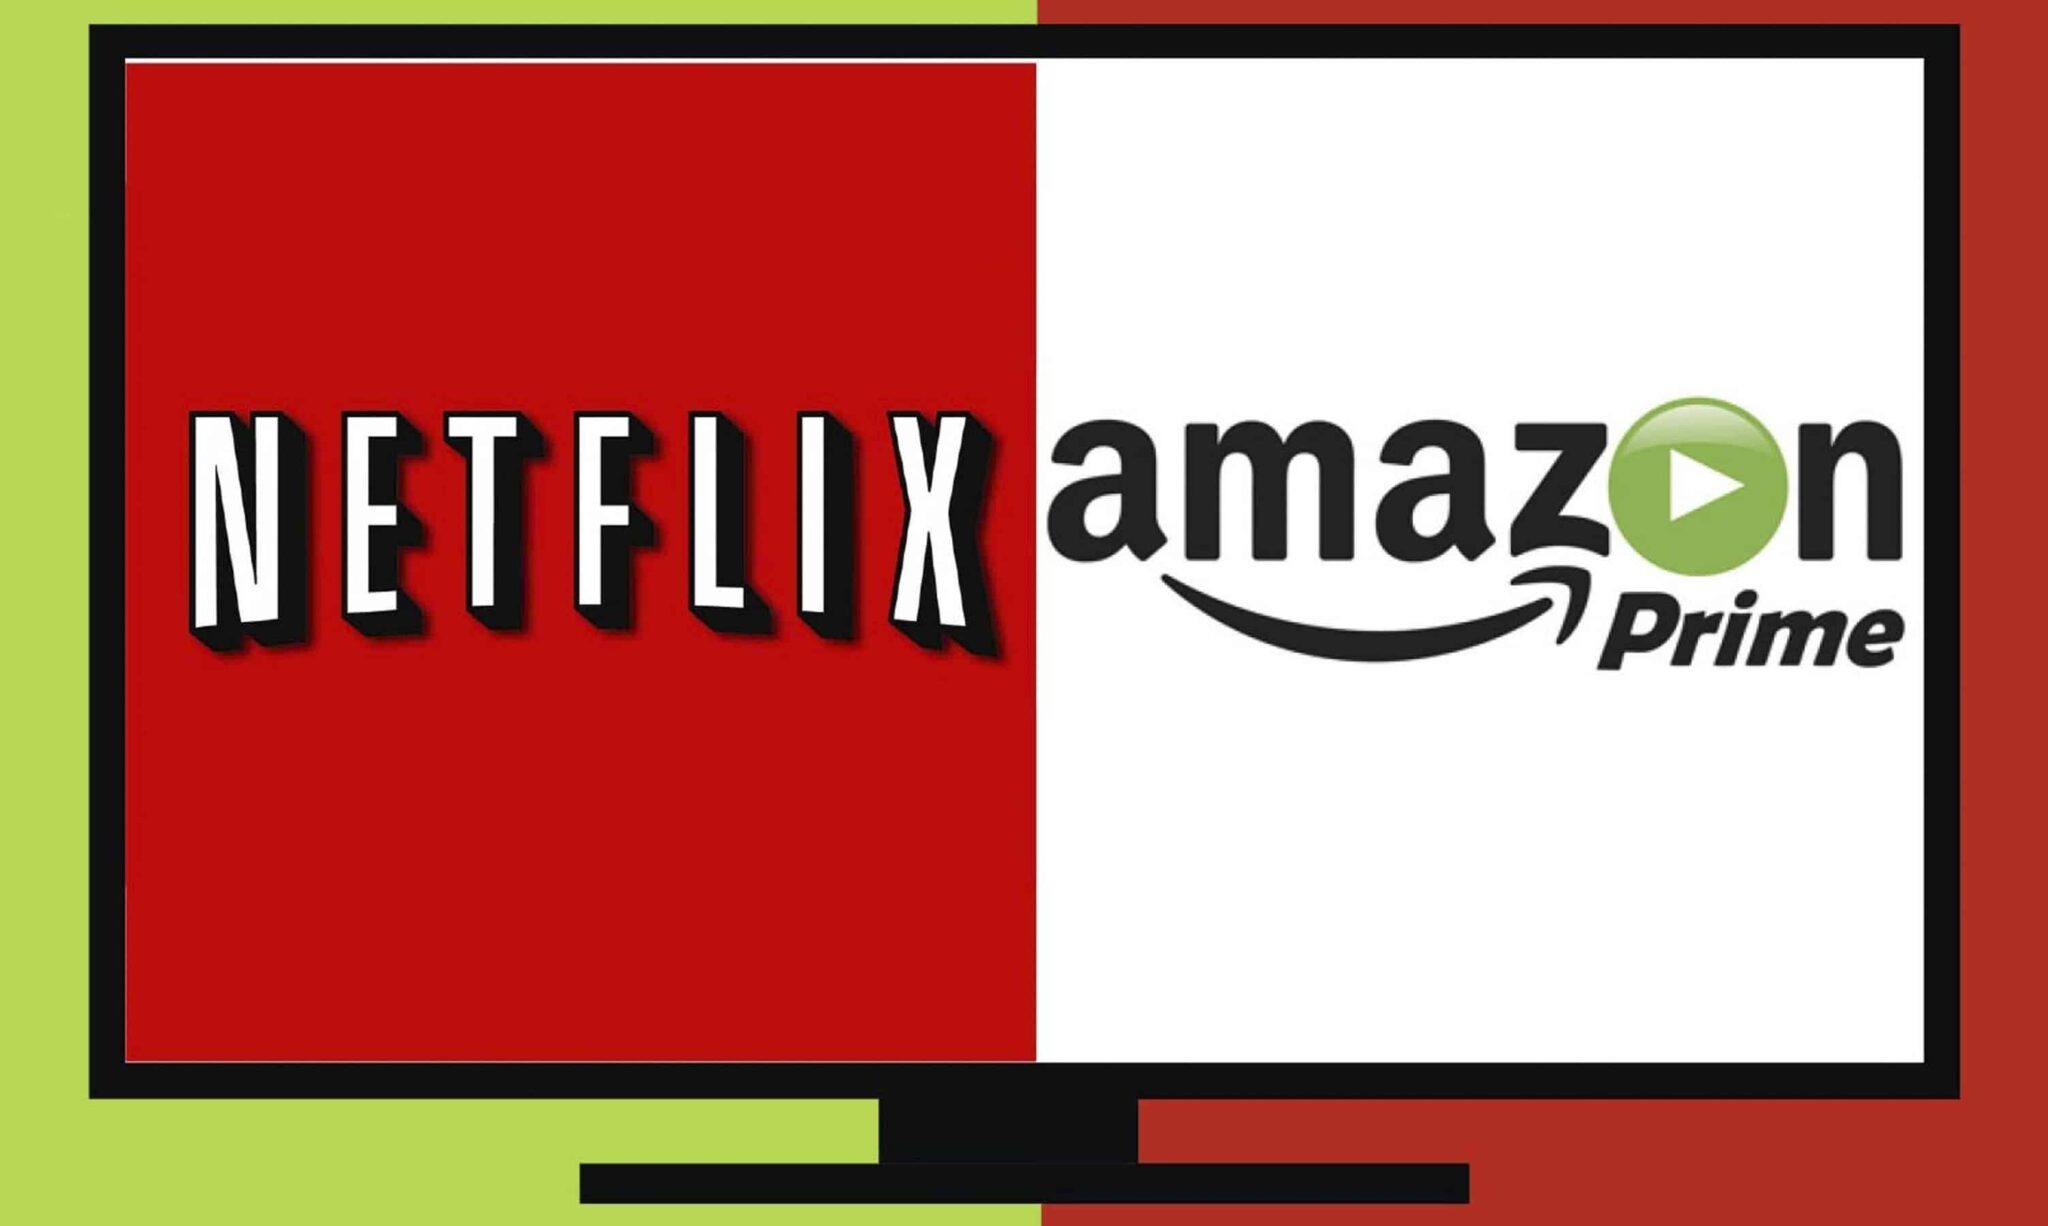 Er Amazon Prime eller Netflix bedre?